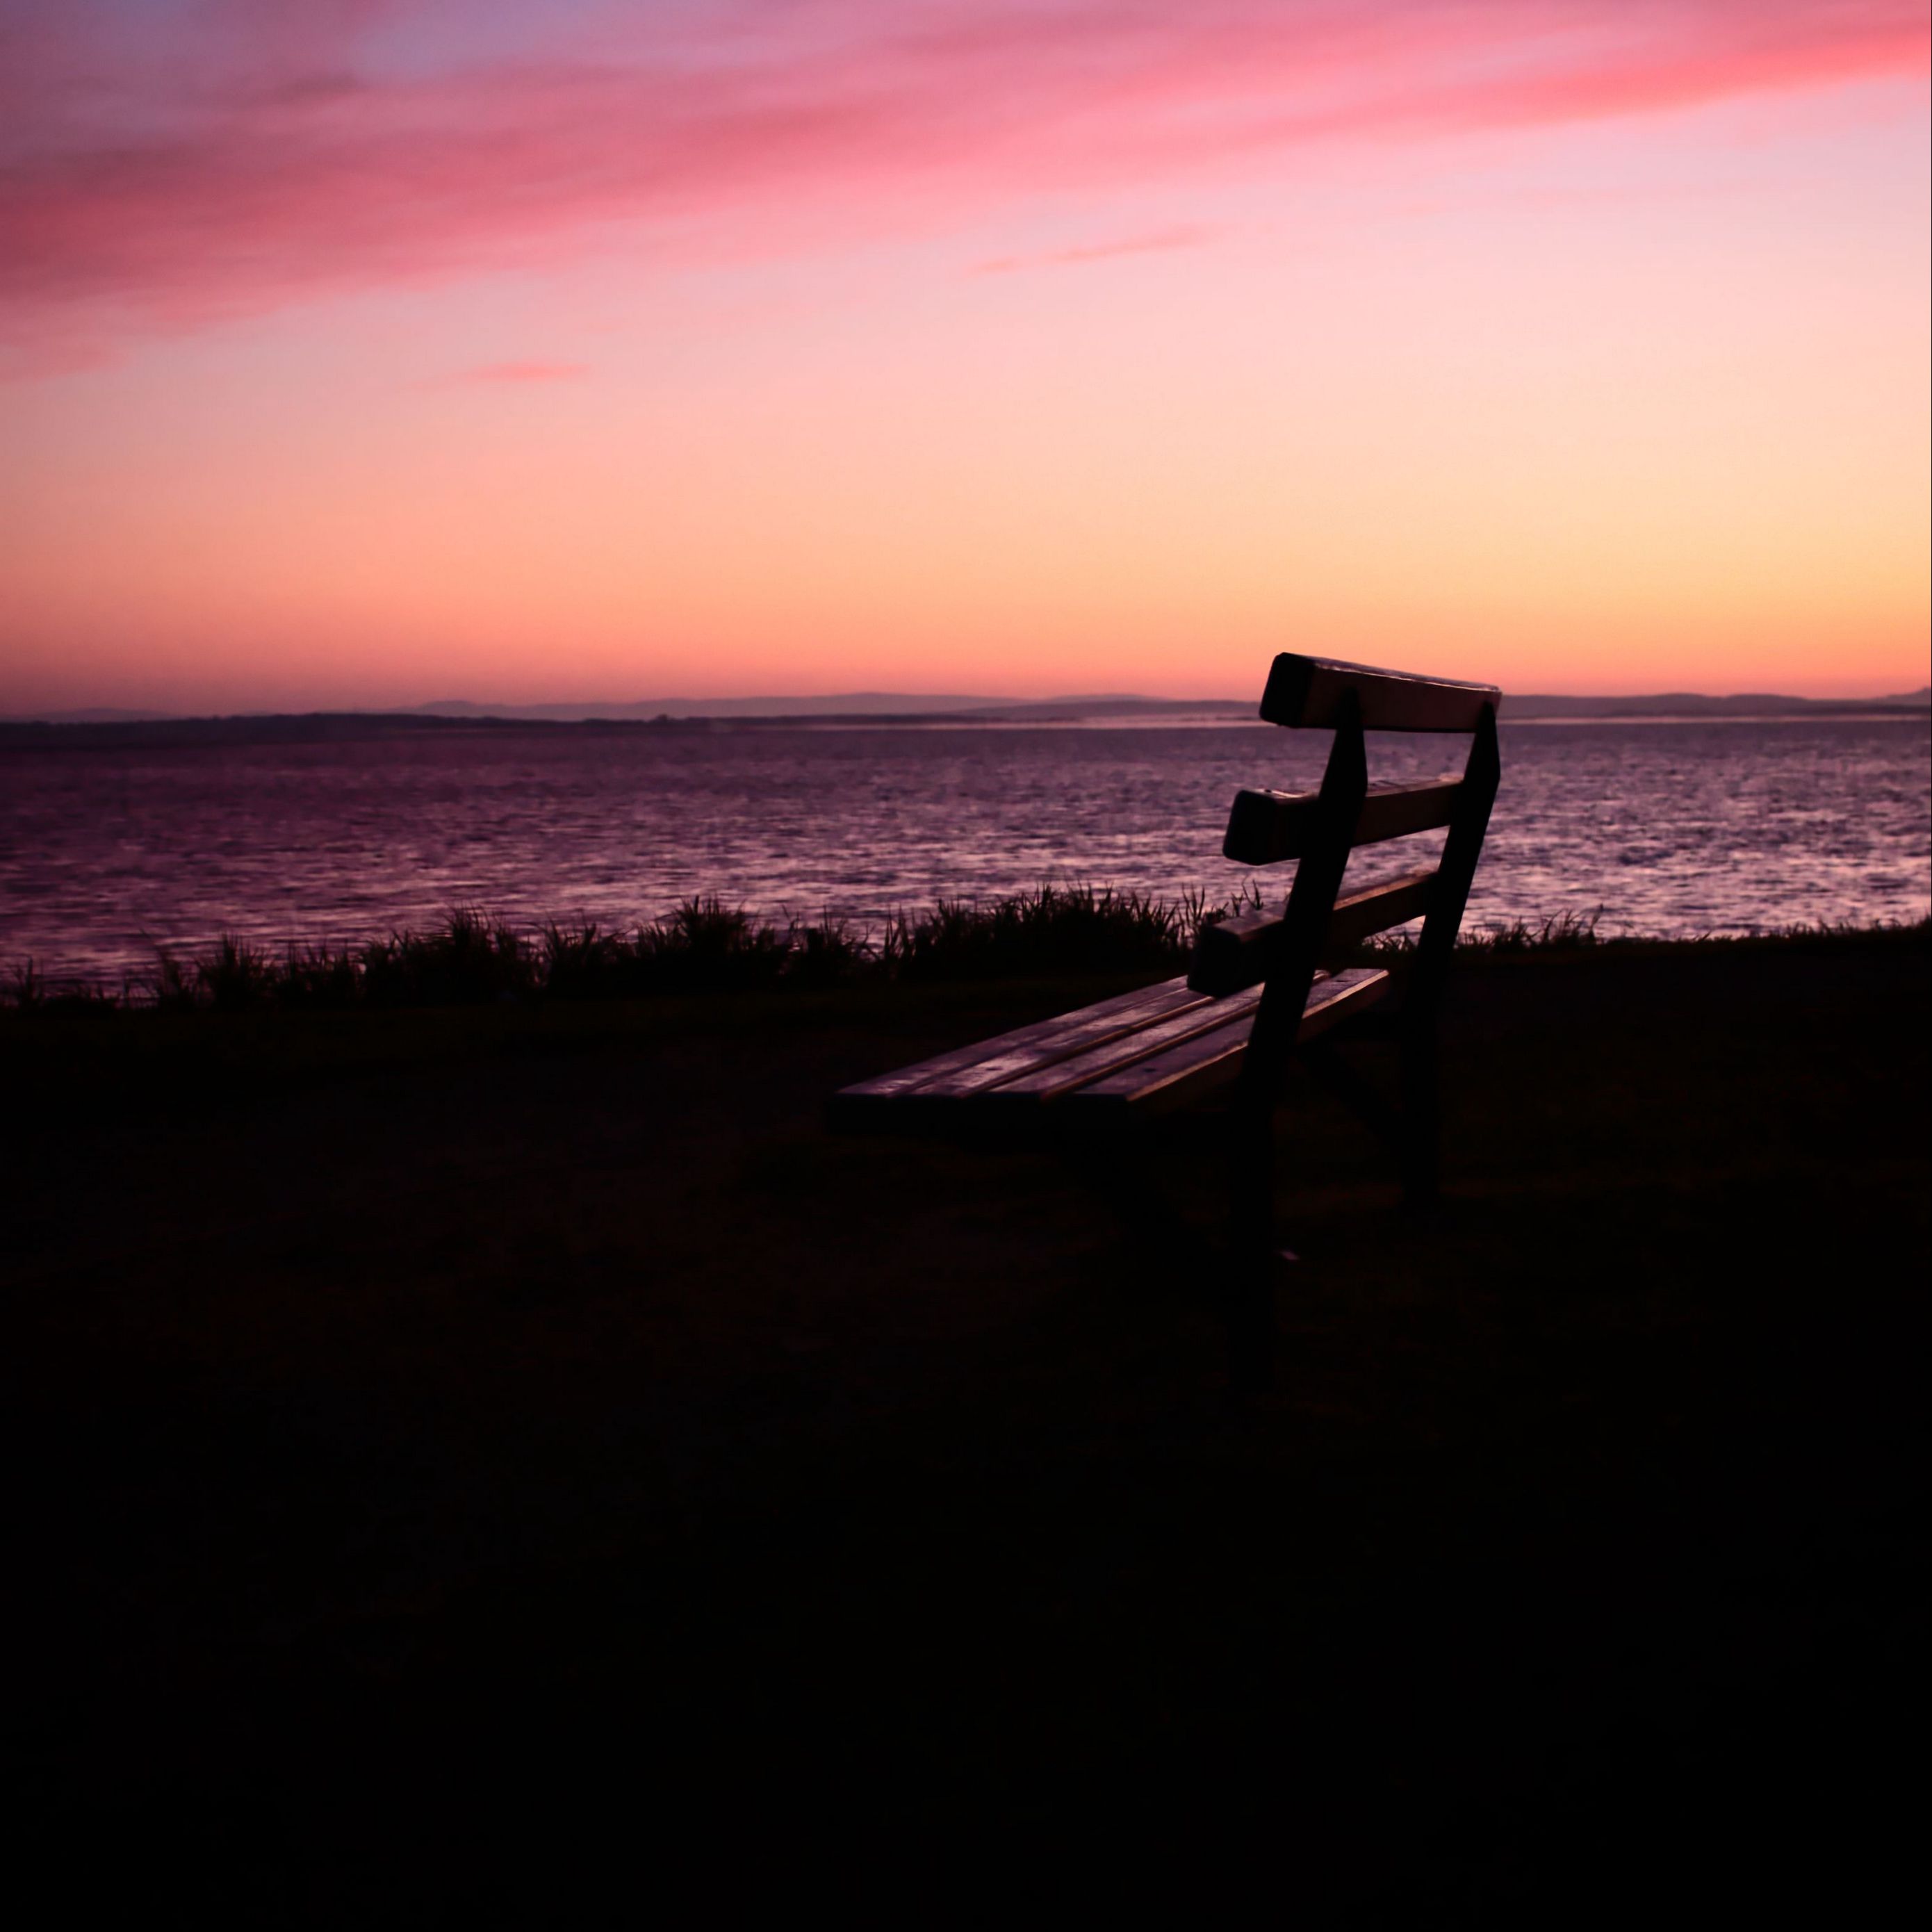 Какие грустные места. Красивый закат и скамейка. Одиночество фото. Скамейка на закате. Лавочка на фоне заката.